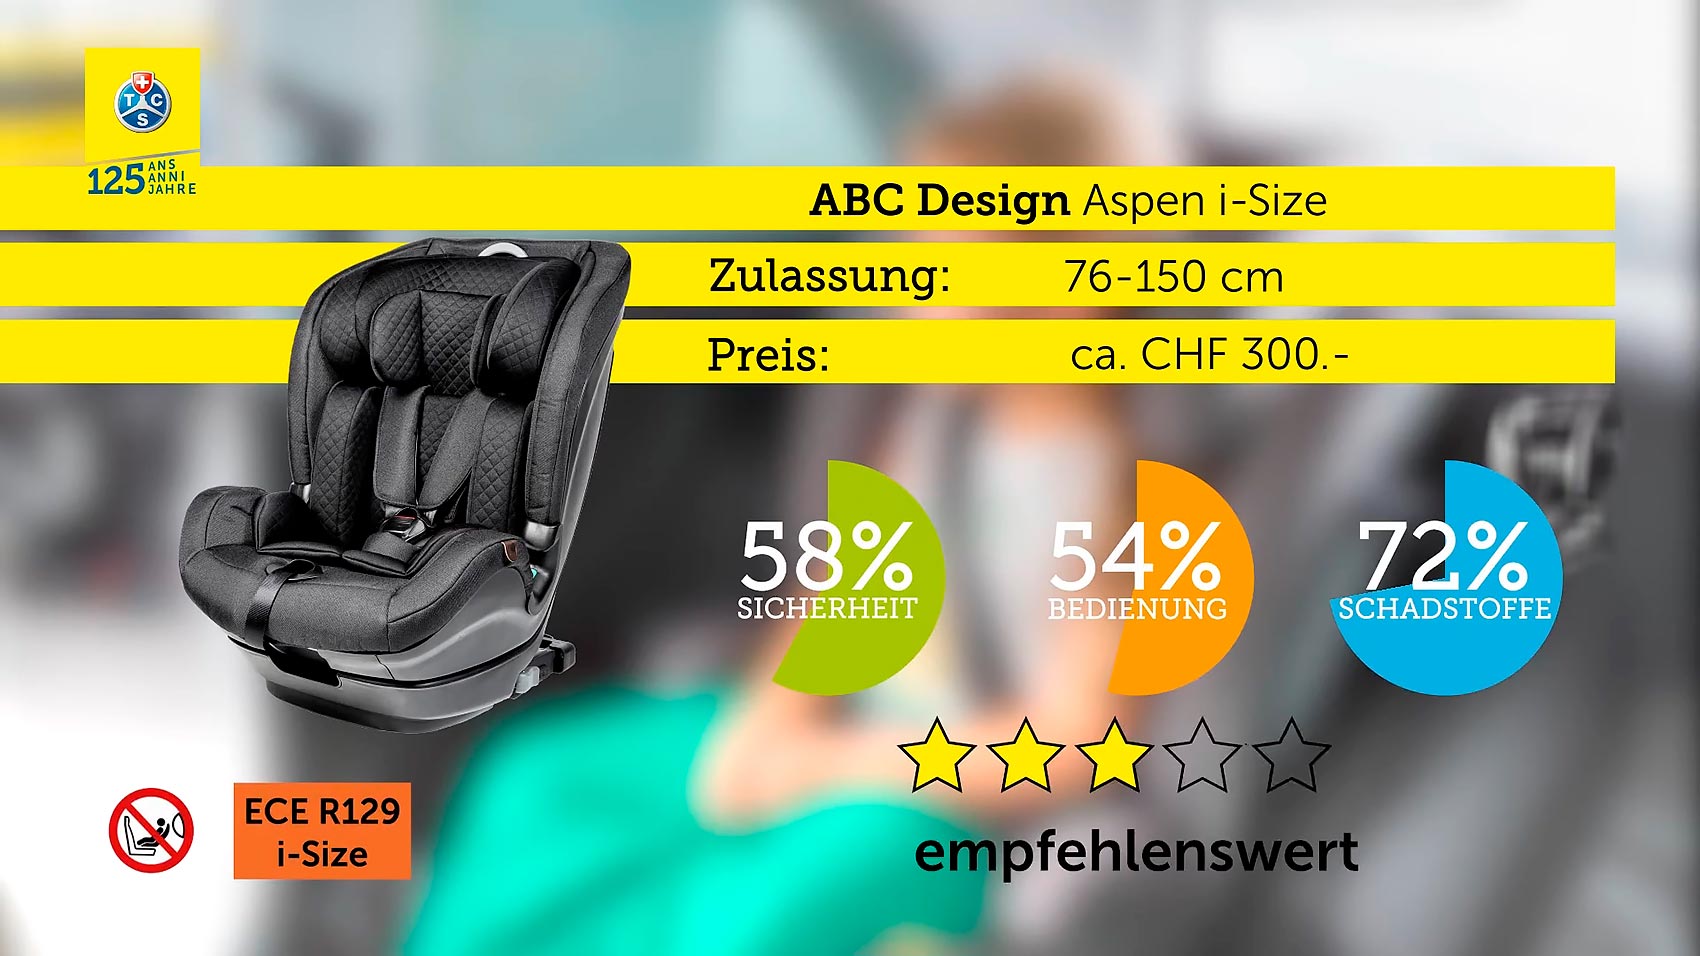 ADAC 2021-2 - автокресло ABC Design Aspen i-Size